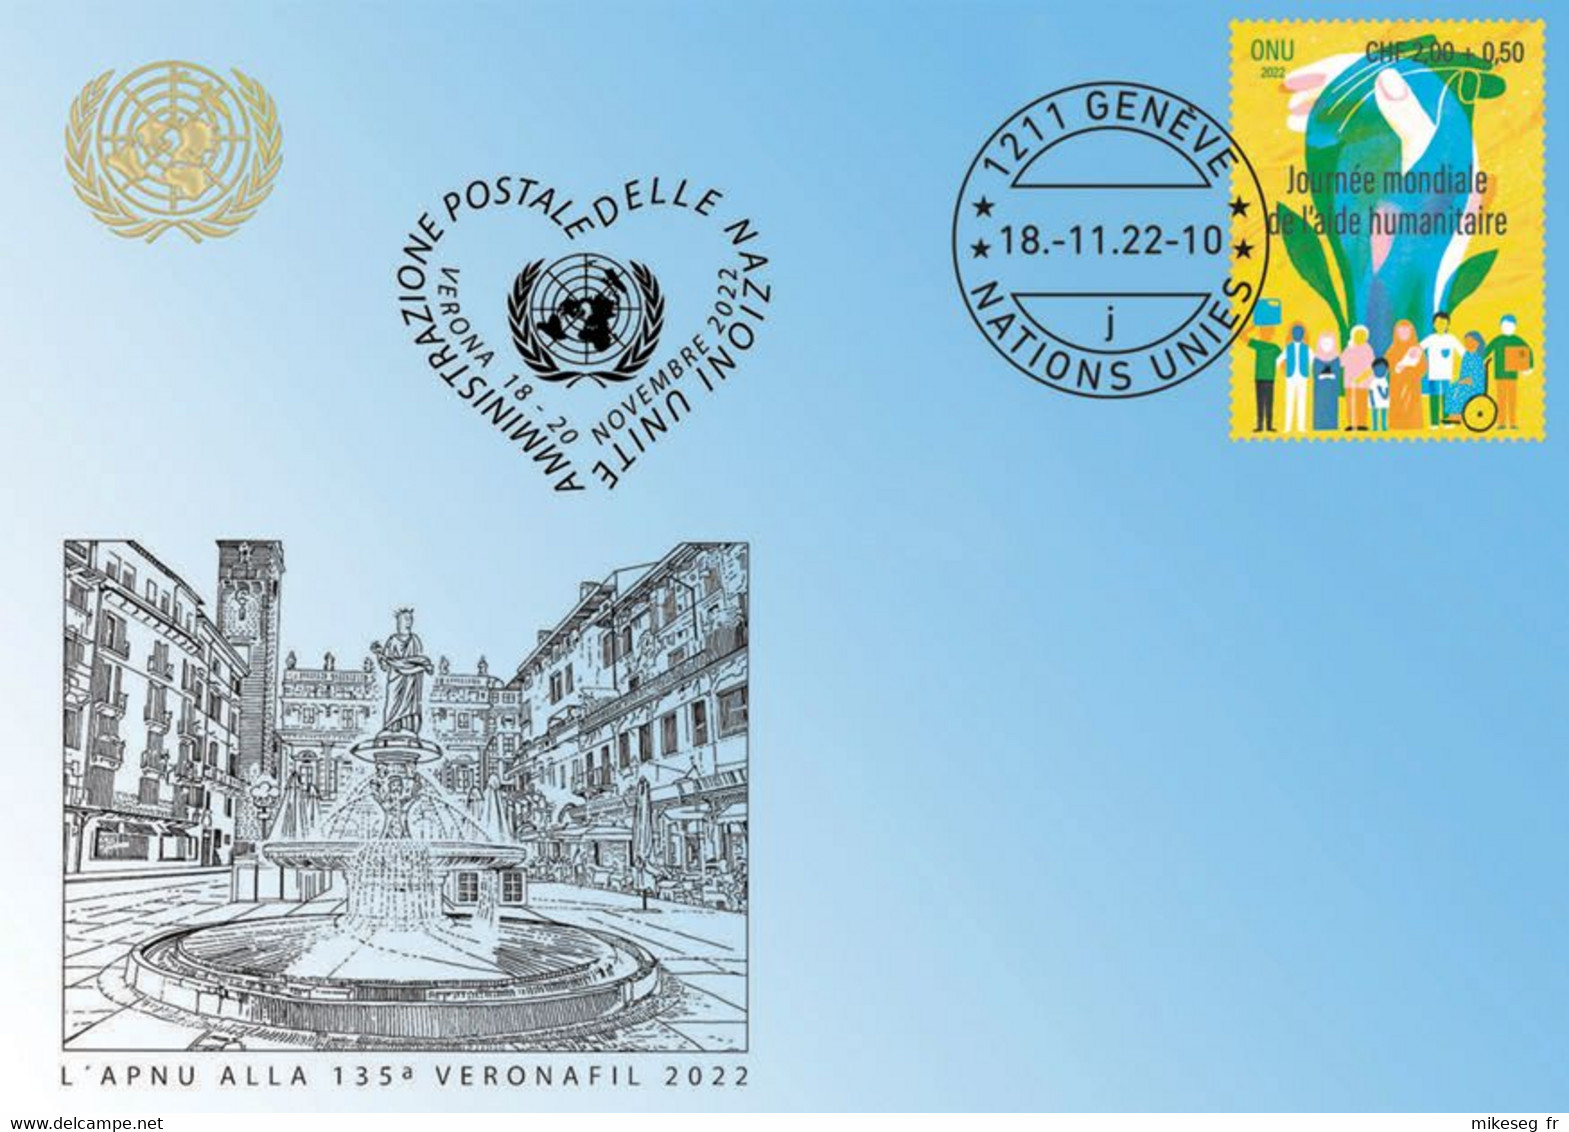 ONU Genève 2022 - Blue Card Veronafil Verona 18-20 Novembre 2022 - Timbre Aide Humanitaire - Maximum Cards